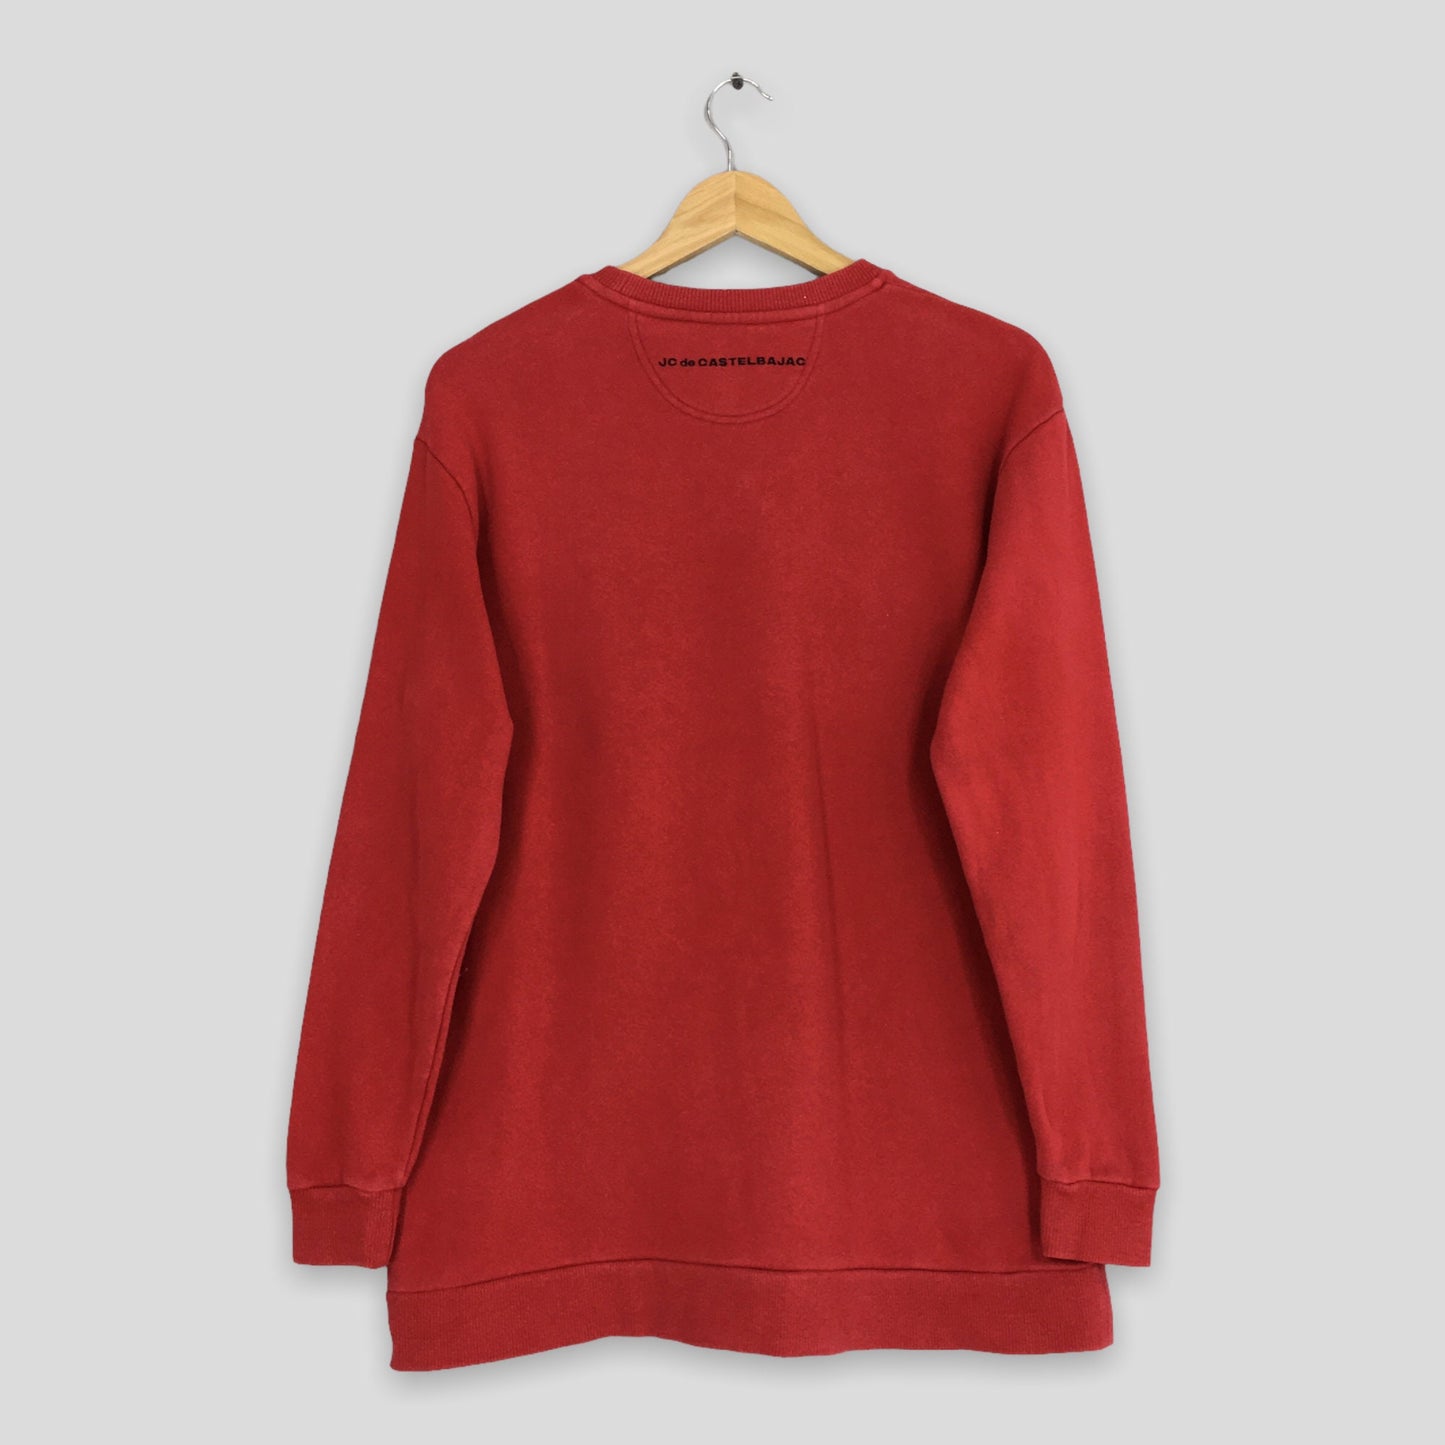 Jc De Castelbajac Sports Red Sweatshirt Medium